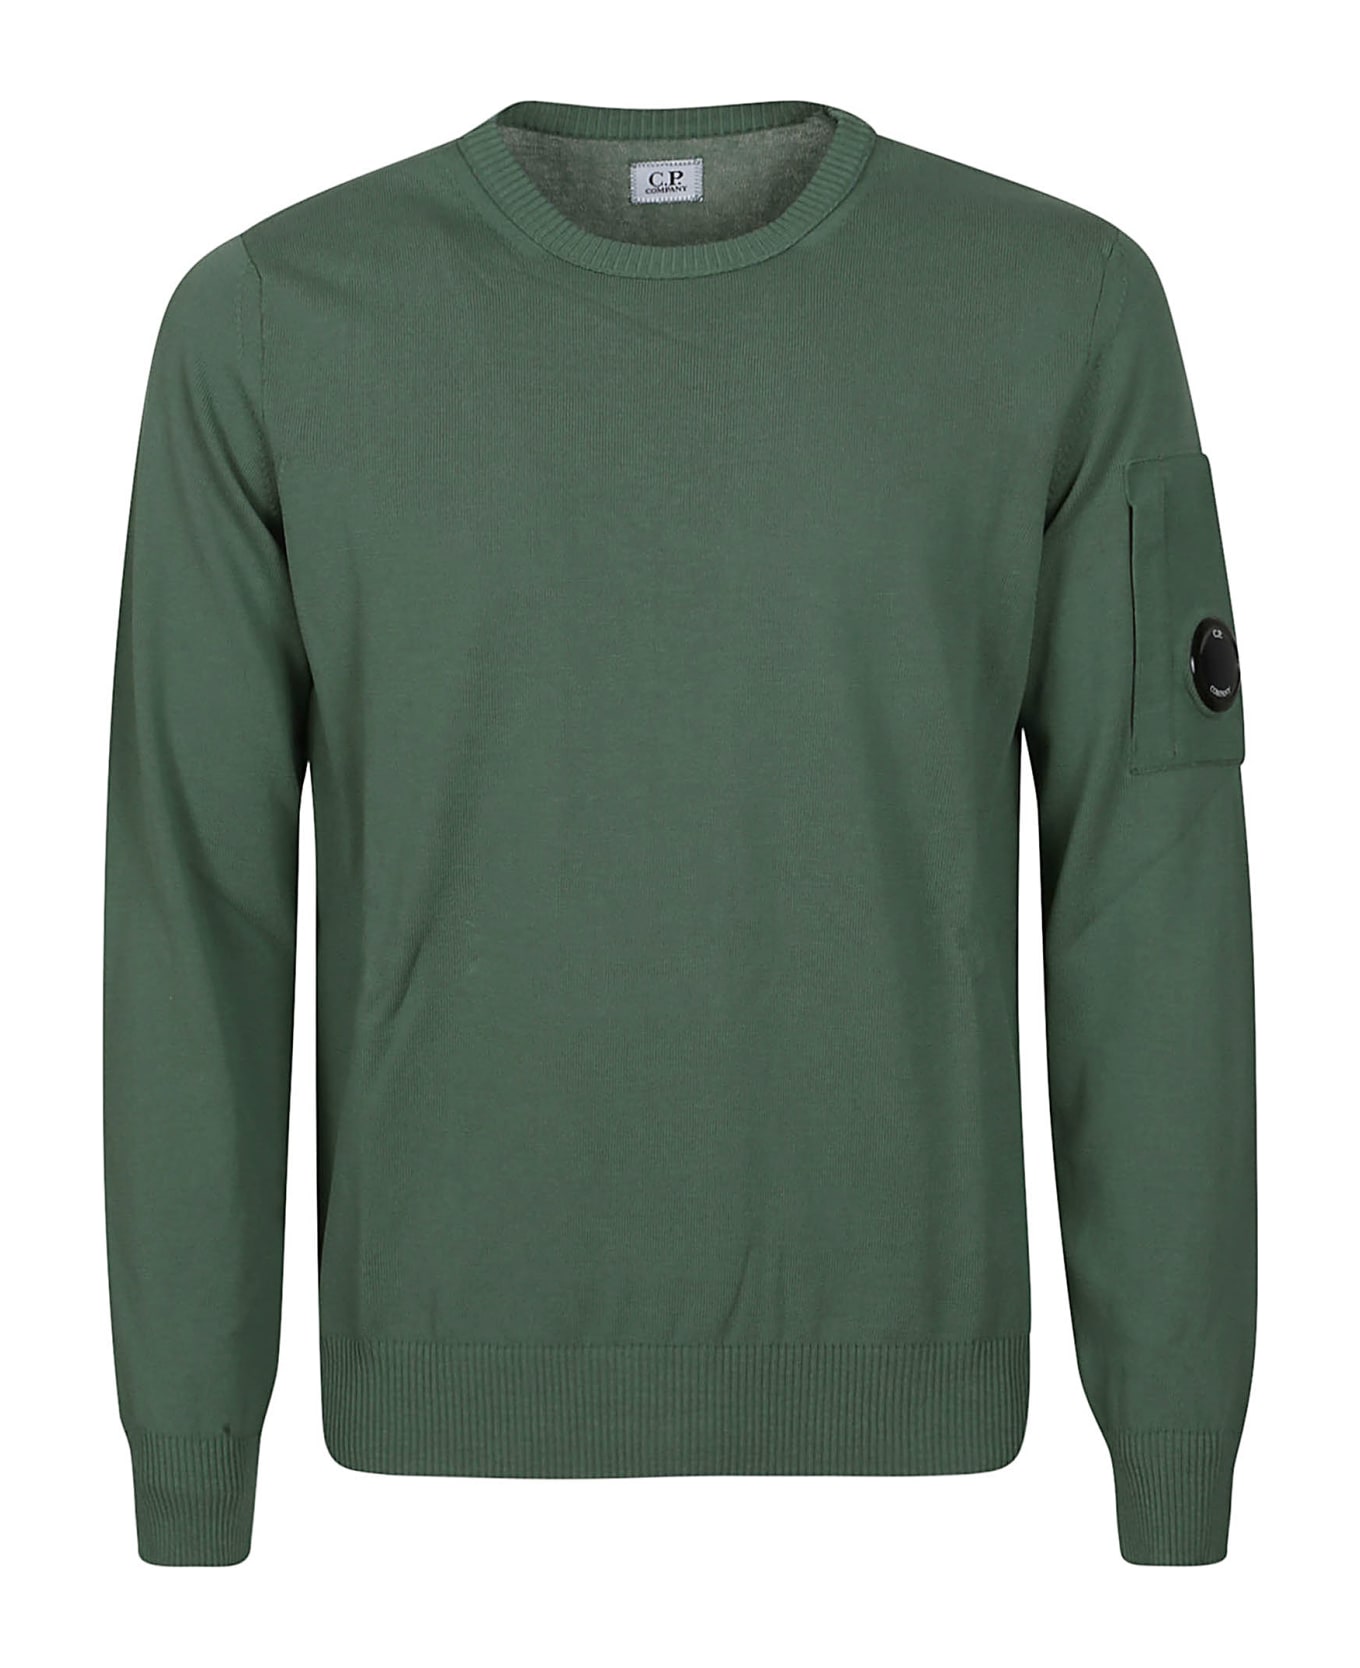 C.P. Company Sweater - Duck Green ニットウェア